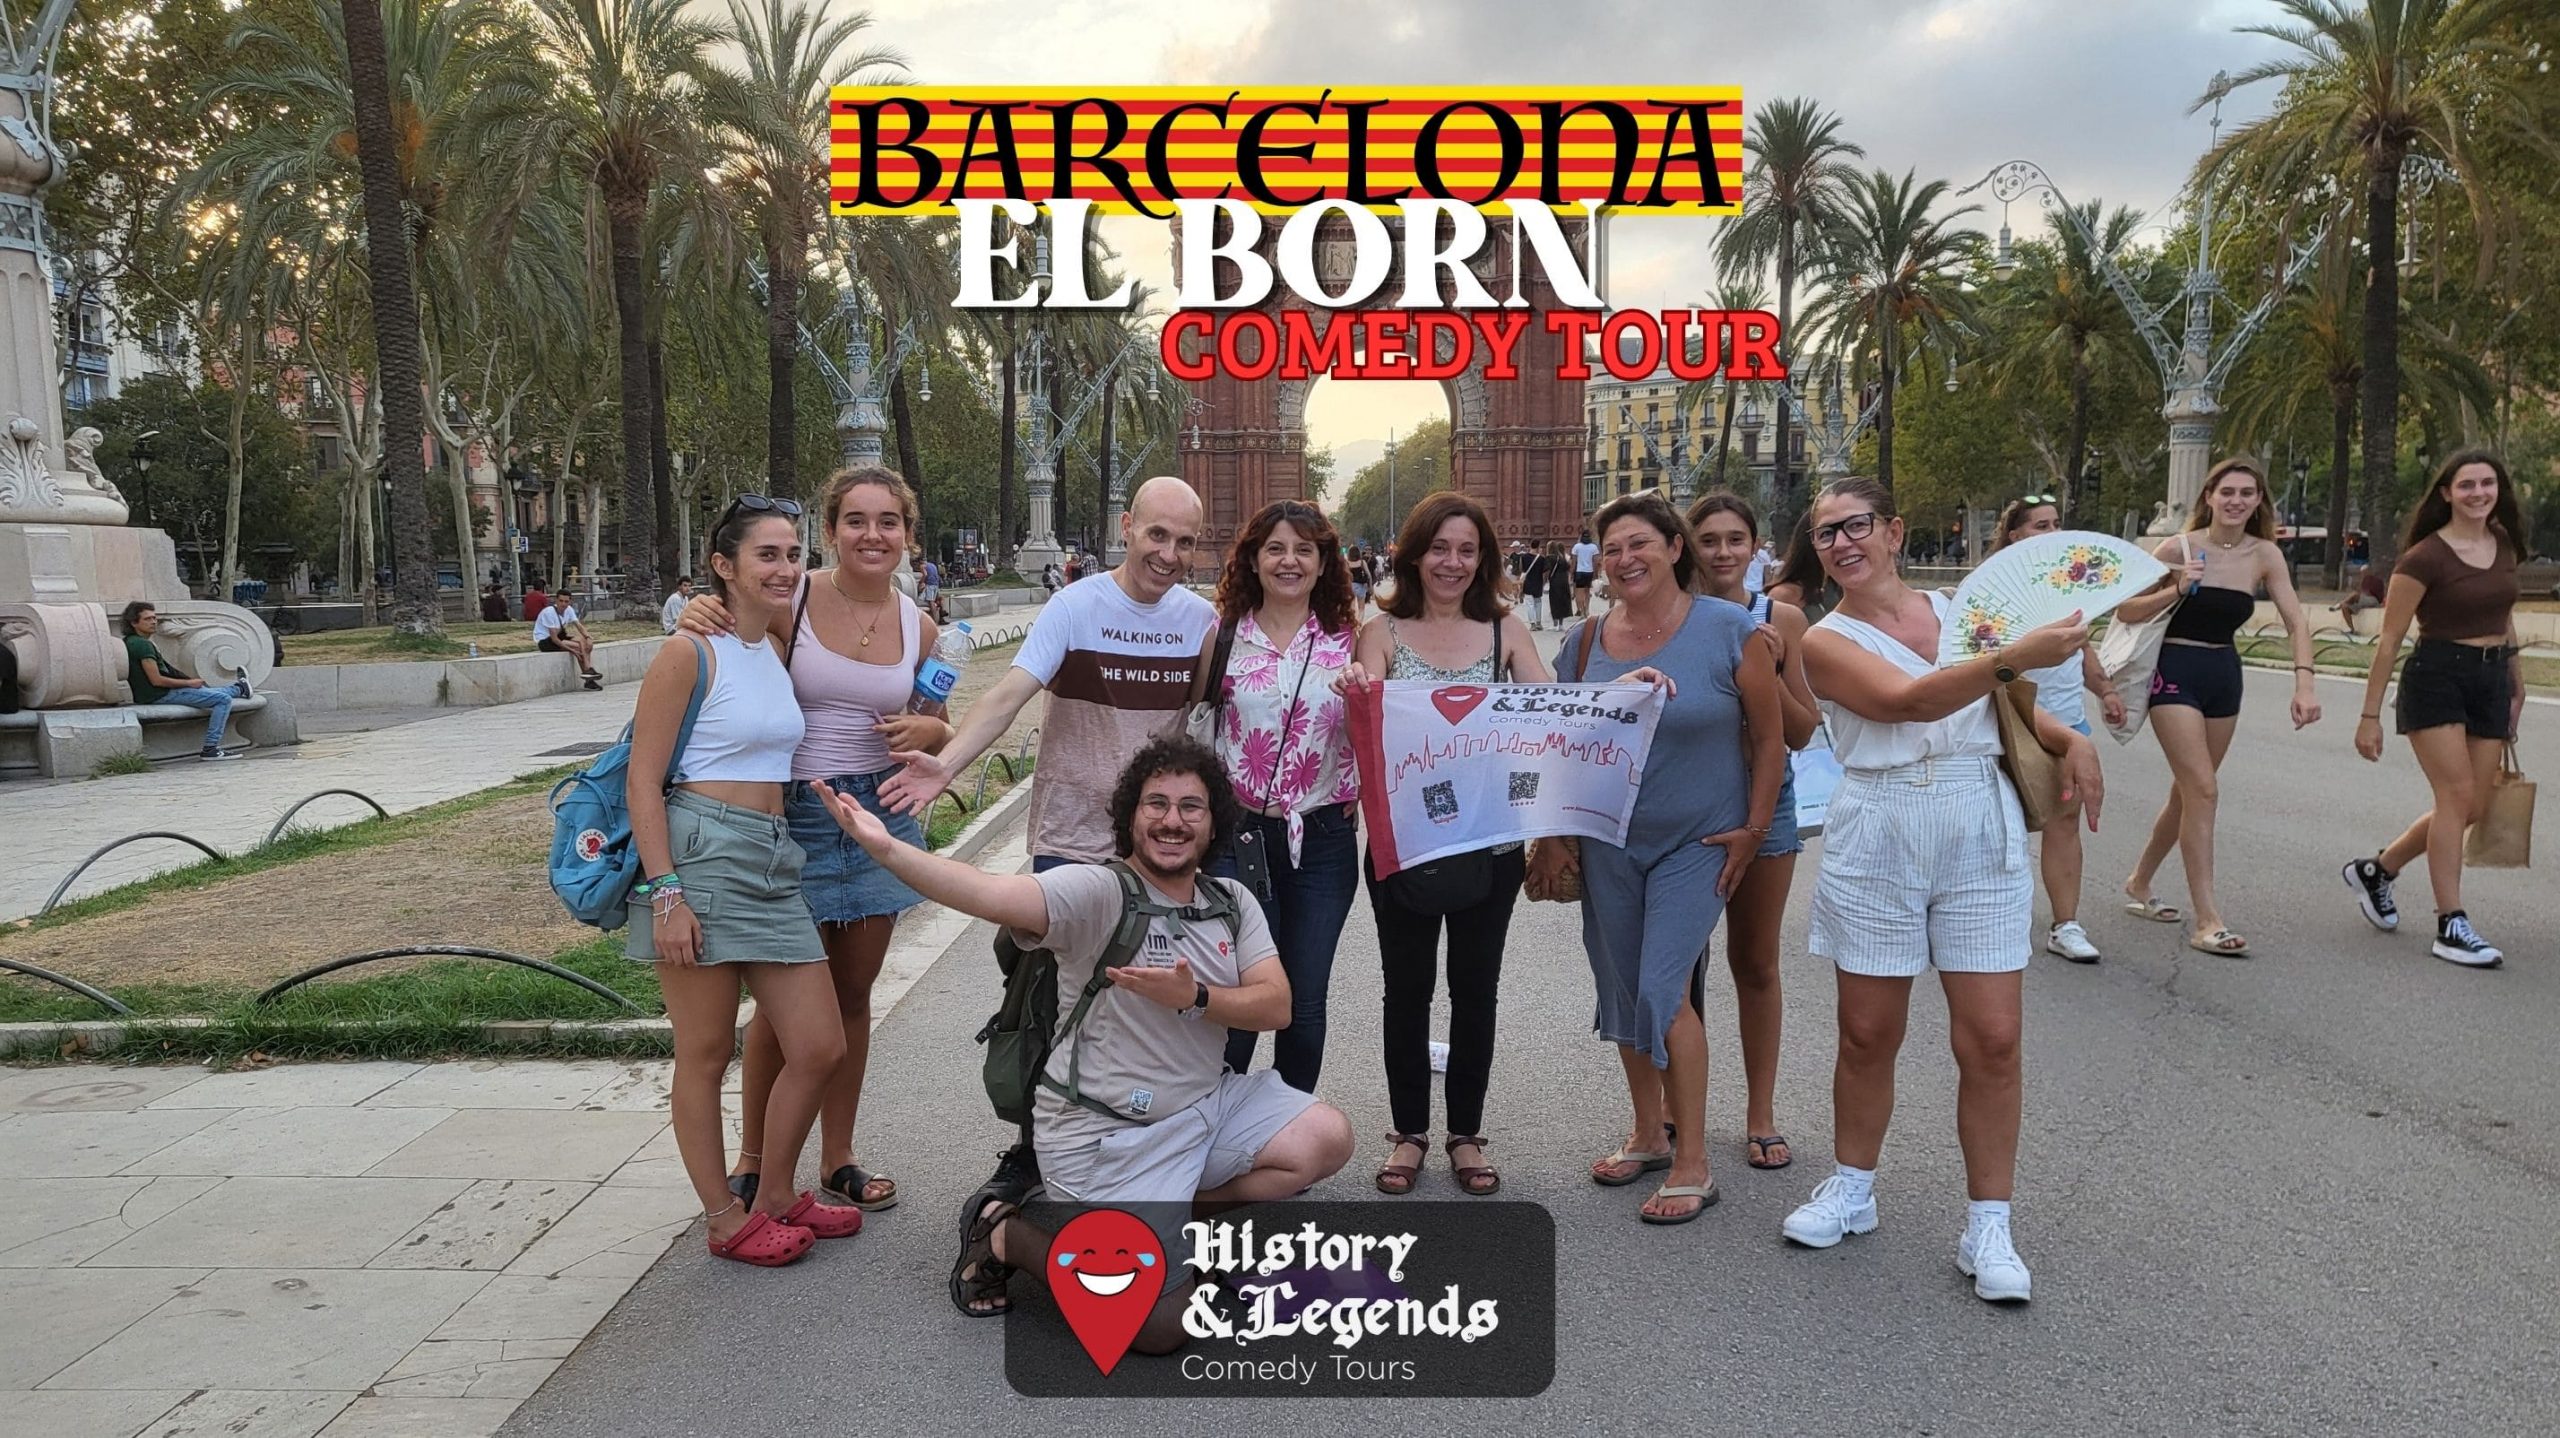 Barcelona el Born HL Comedy Tour